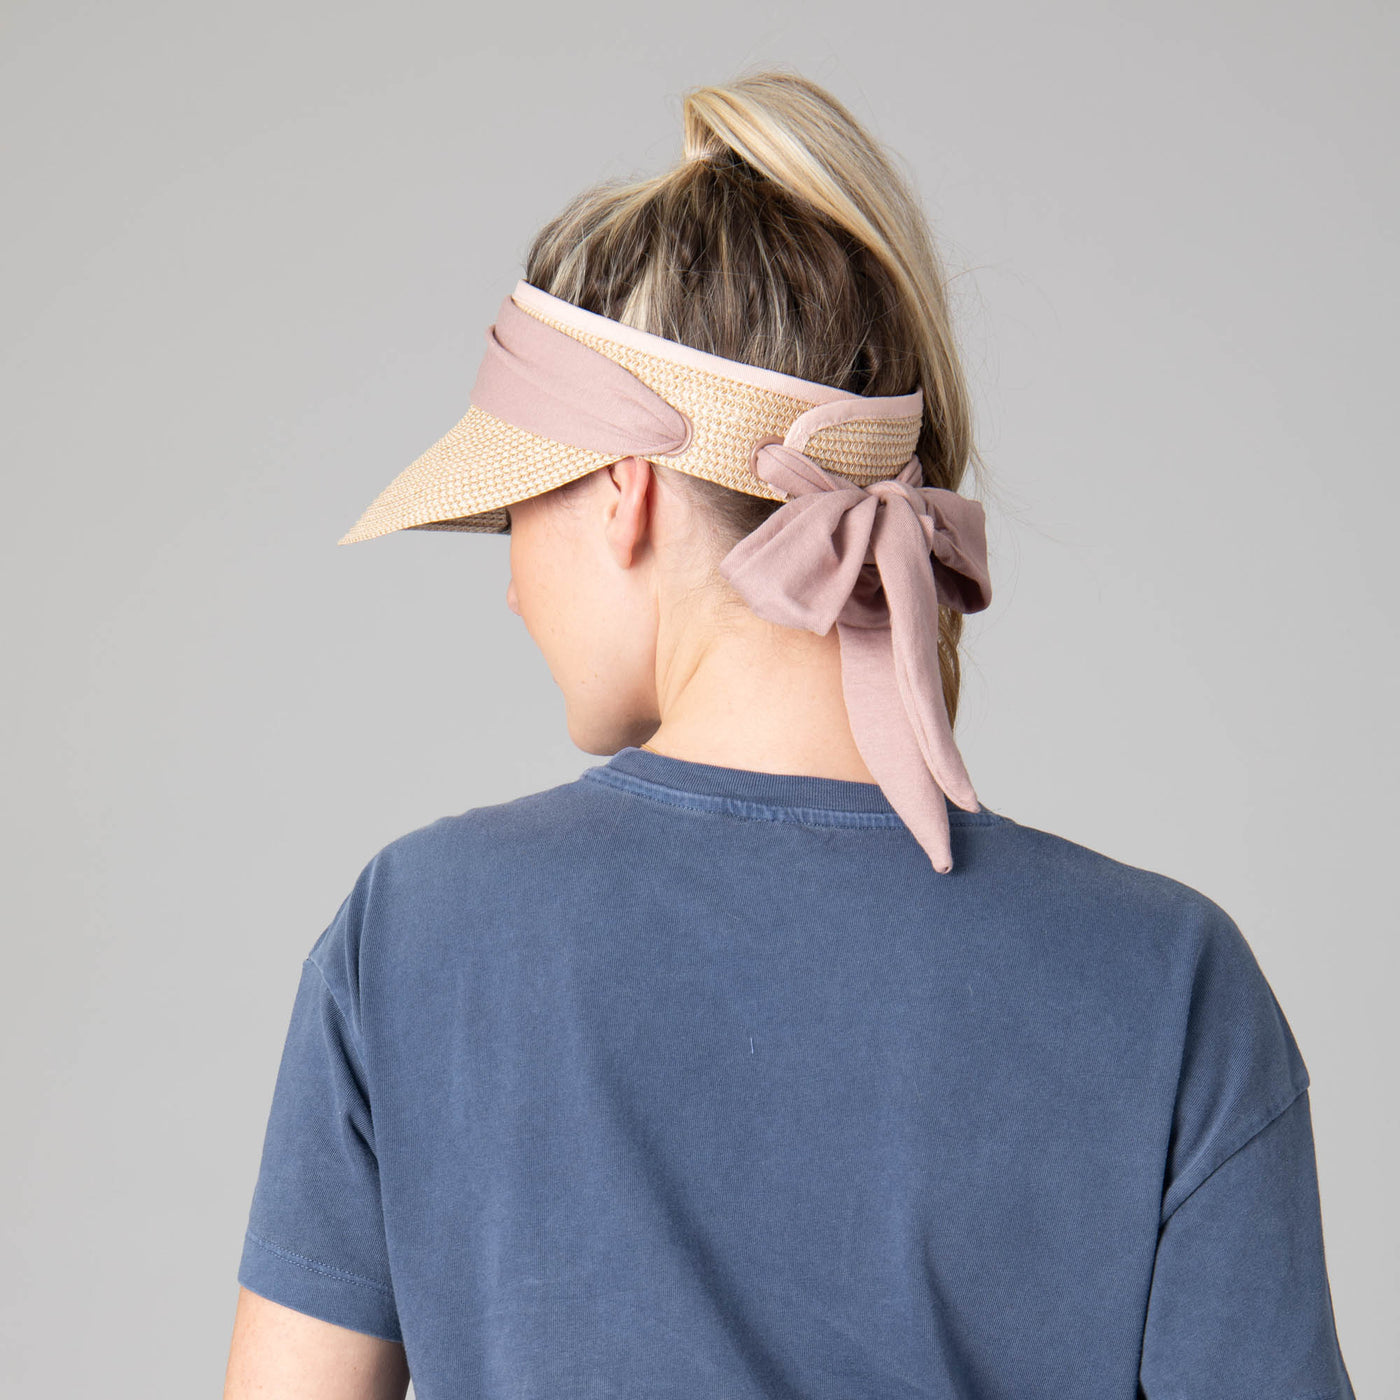 Crew - Women's Ultrabraid Visor with Wrap Around Tie-VISOR-San Diego Hat Company